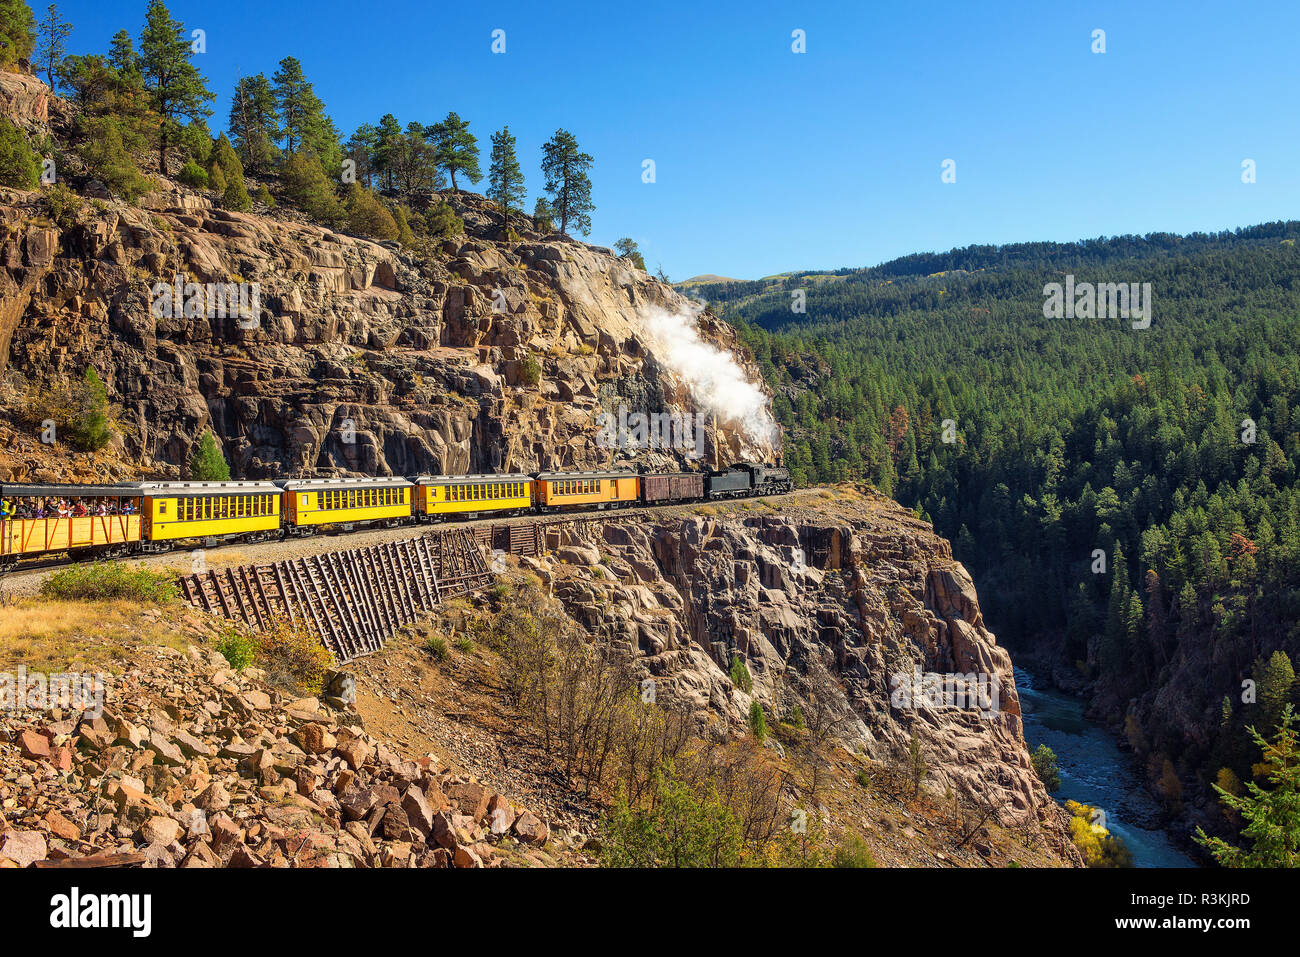 Historic steam engine train travels from Durango to Silverton through the San Juan Mountains in Colorado, USA. Stock Photo